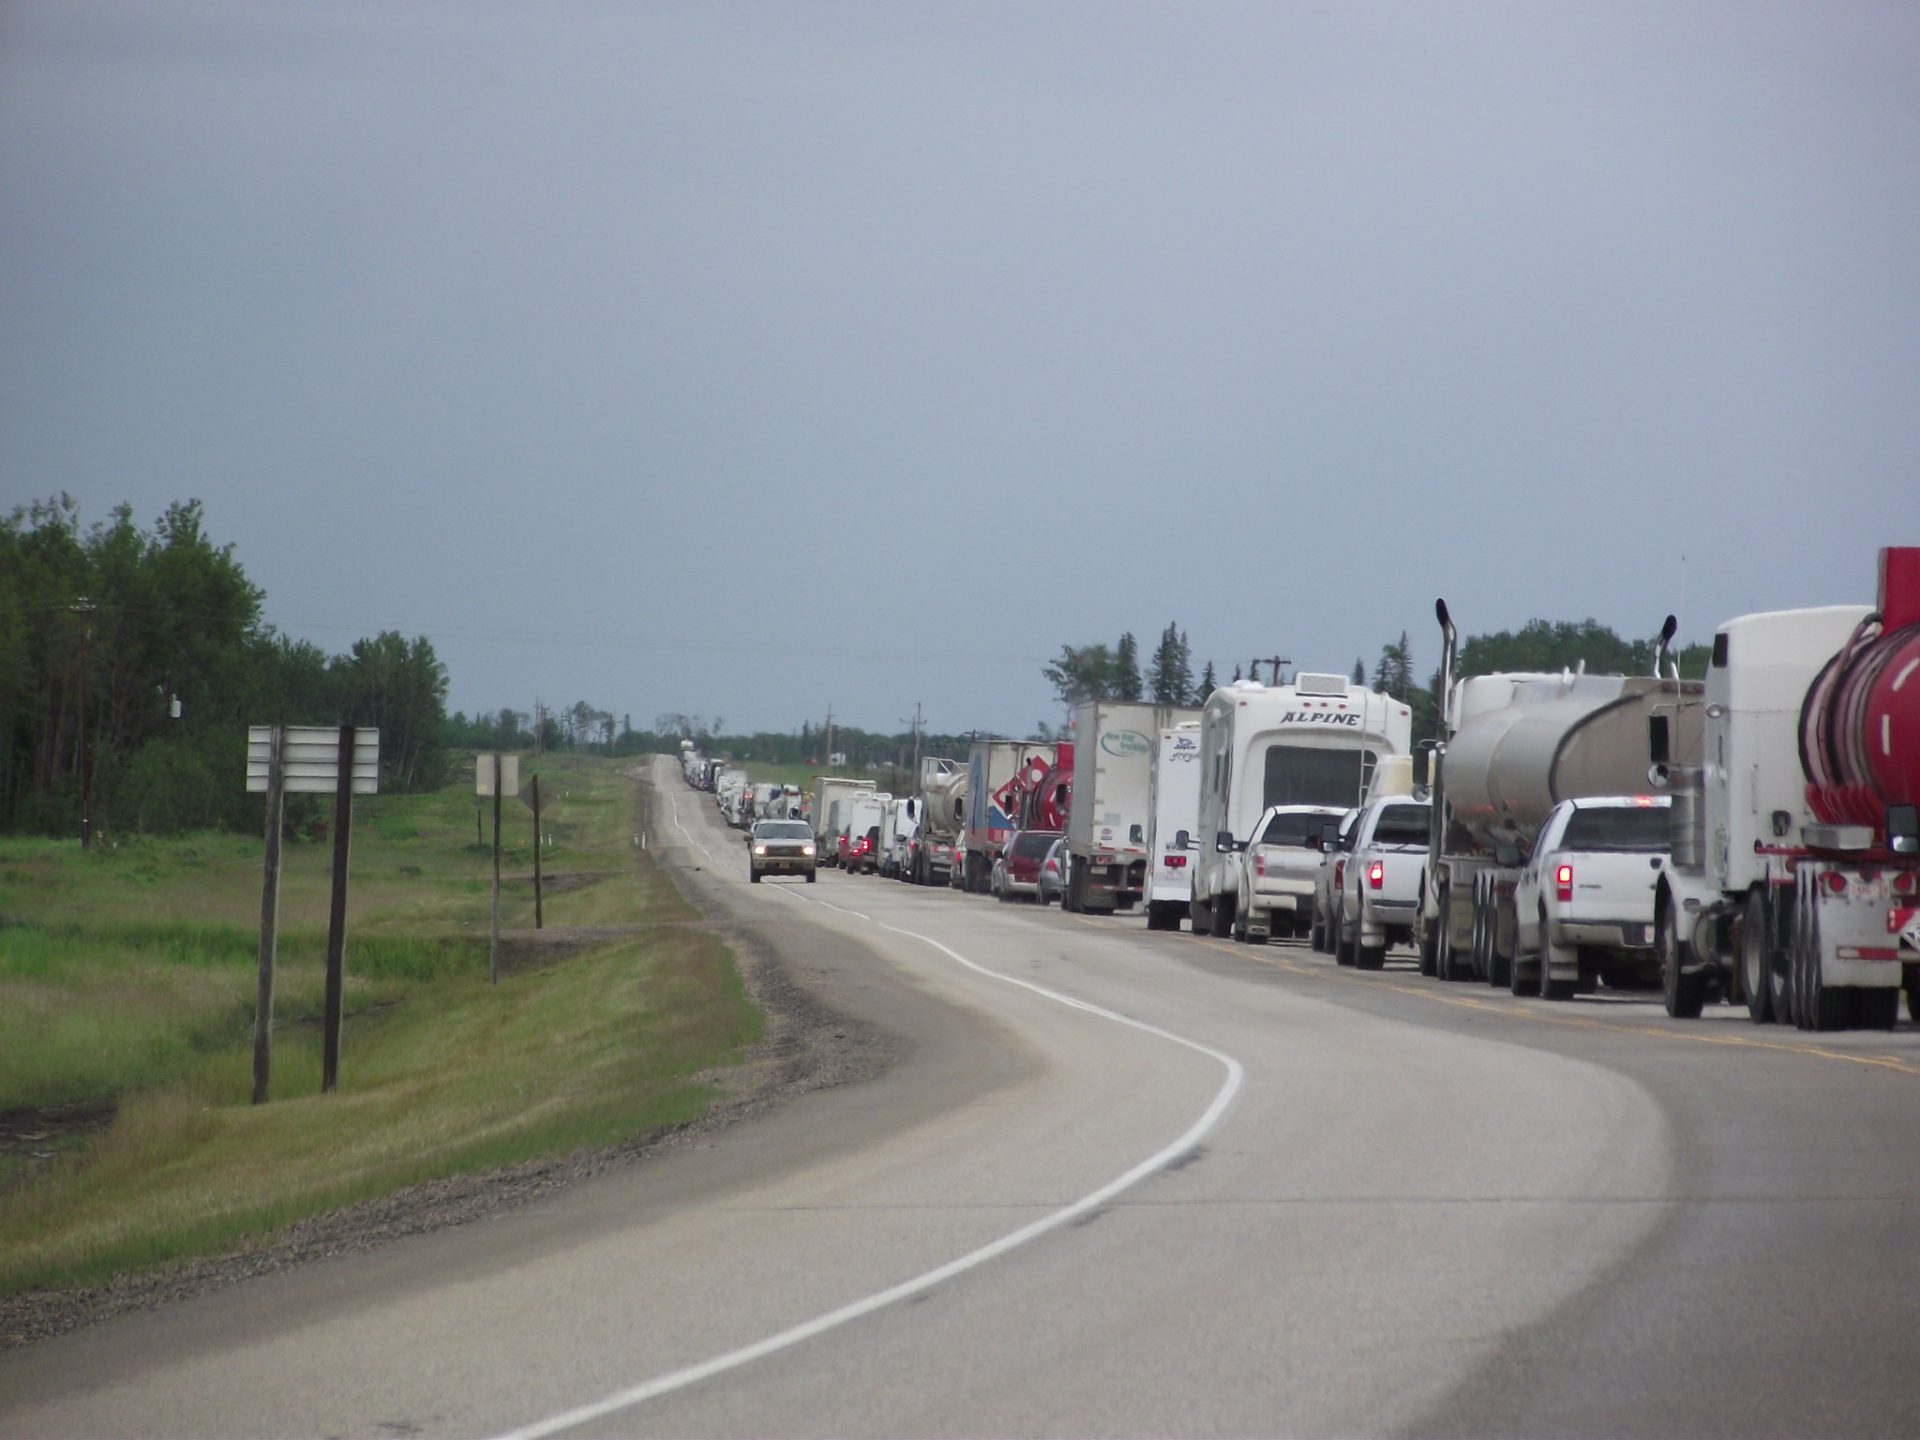 Alberta highway traffic issues down over Easter weekend